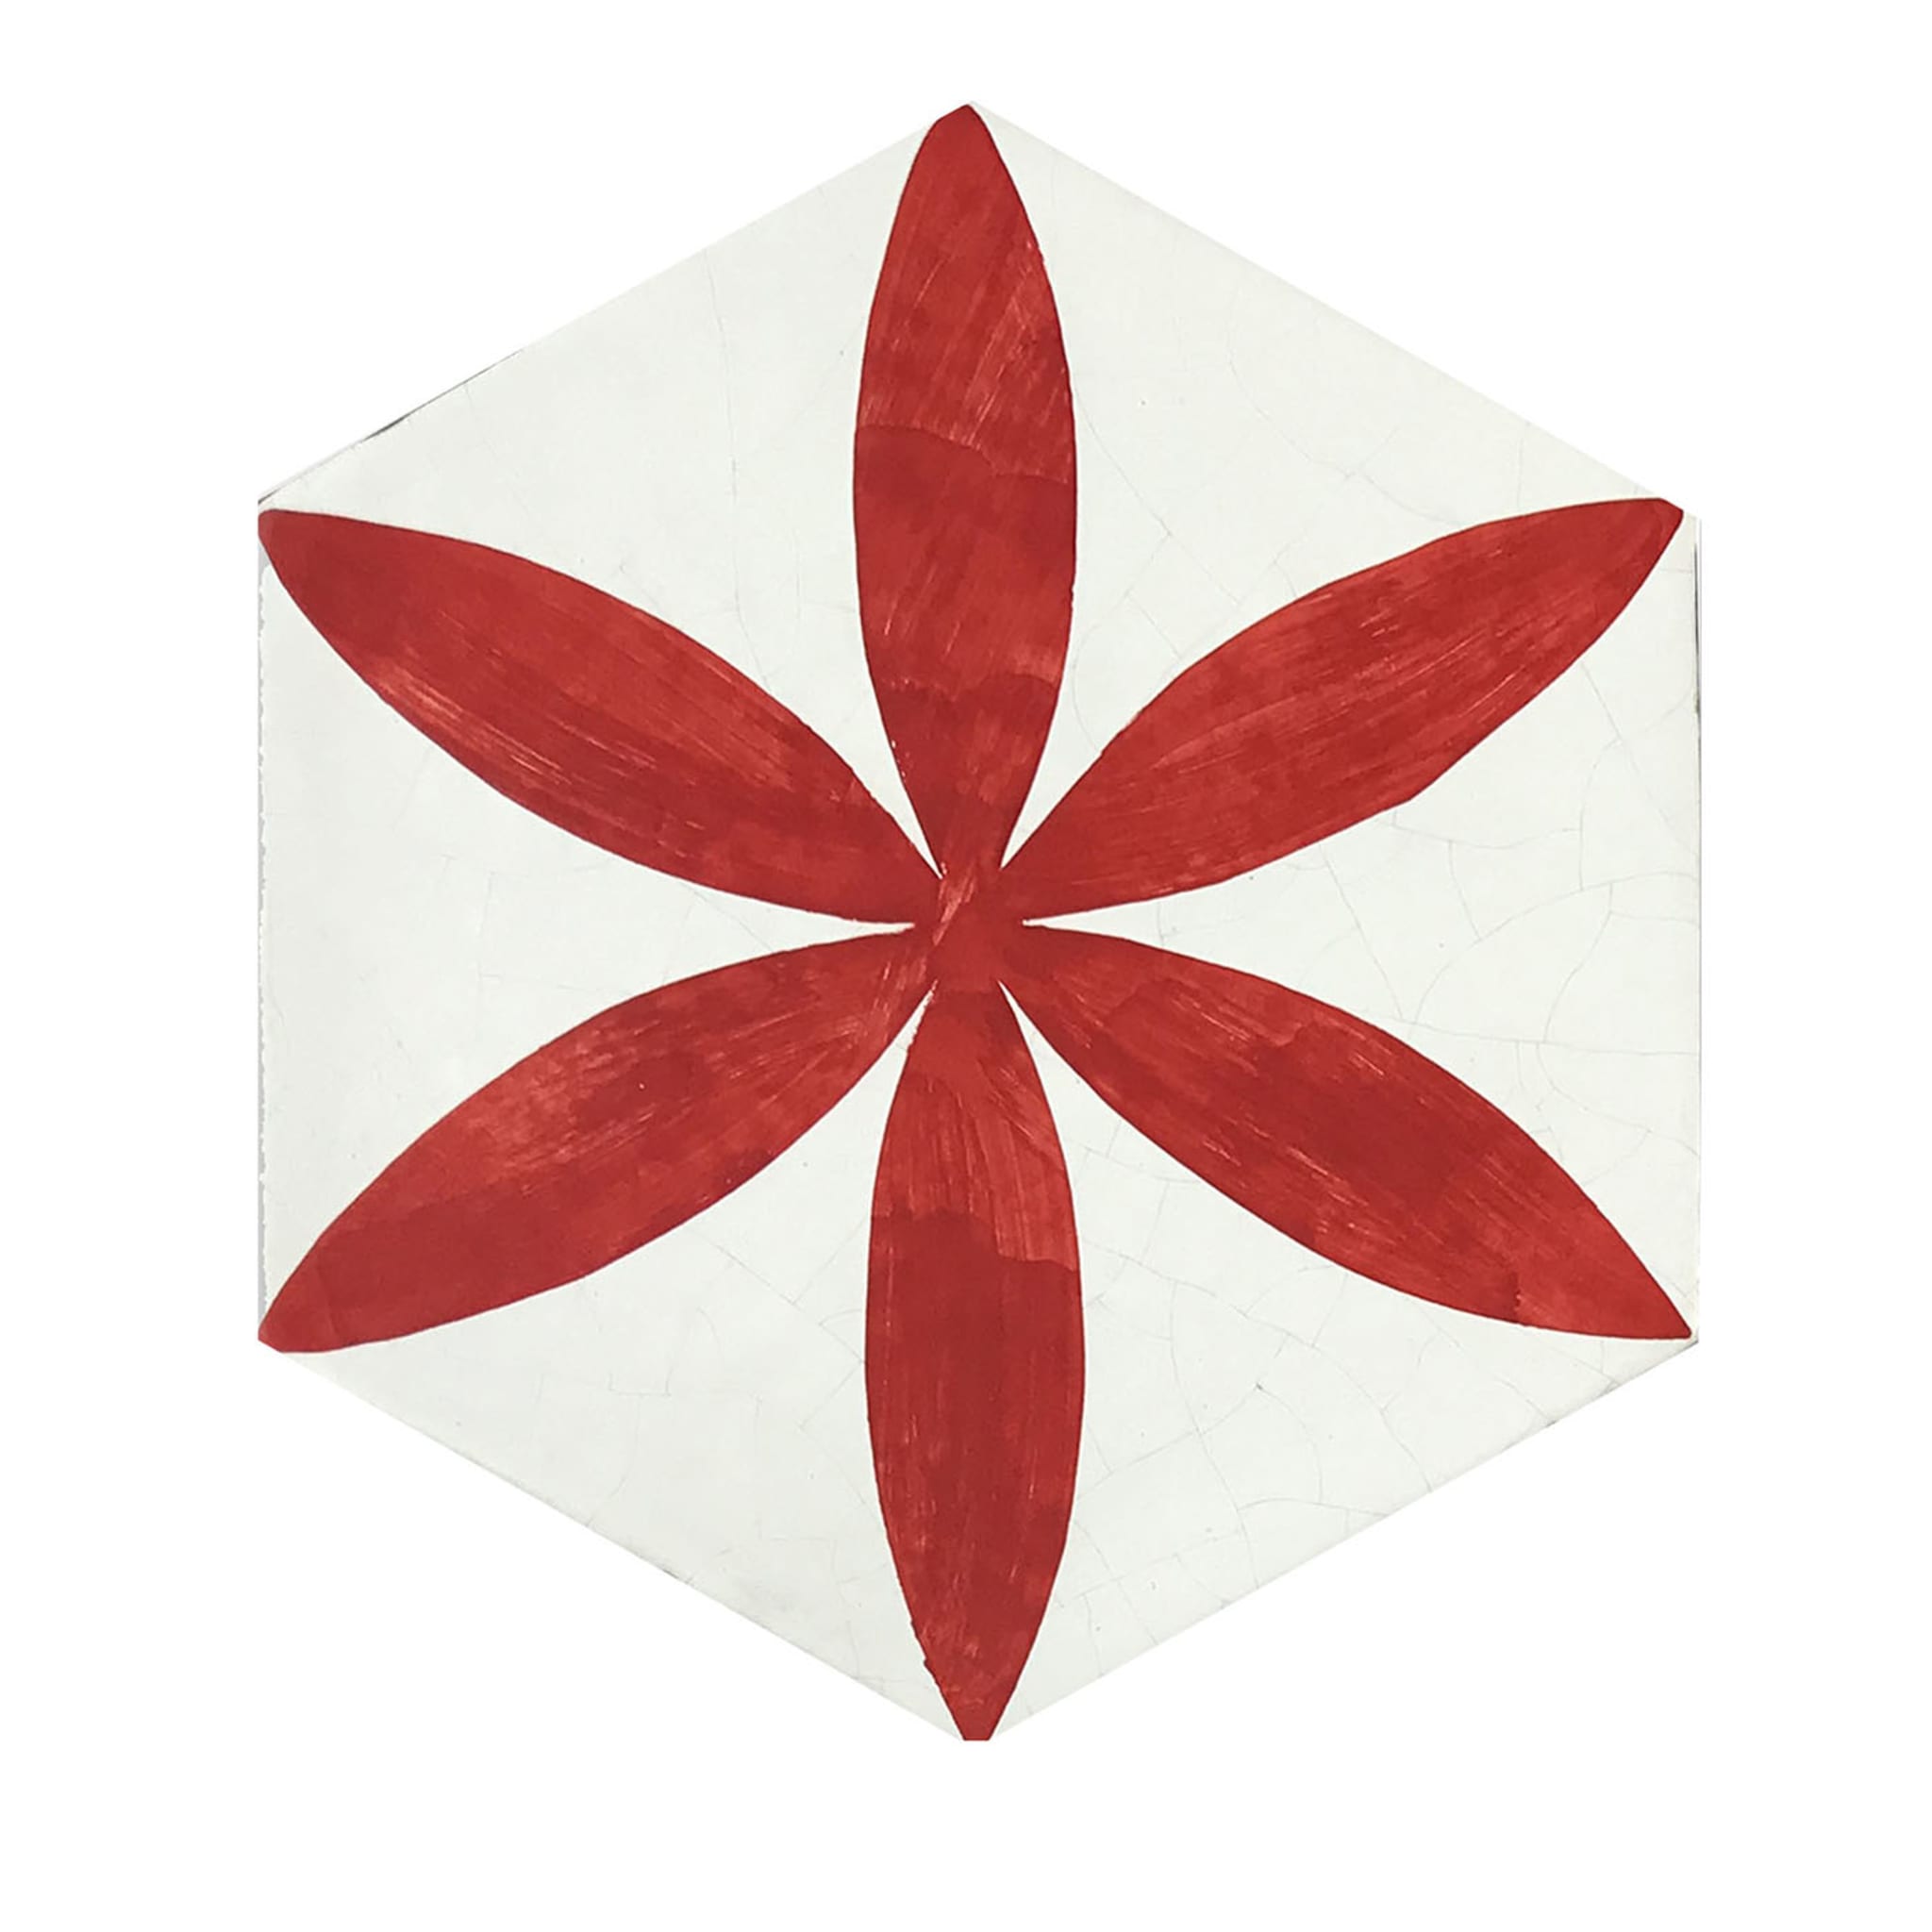 Daamè Set of 28 Hexagonal Red Tiles #1 - Main view